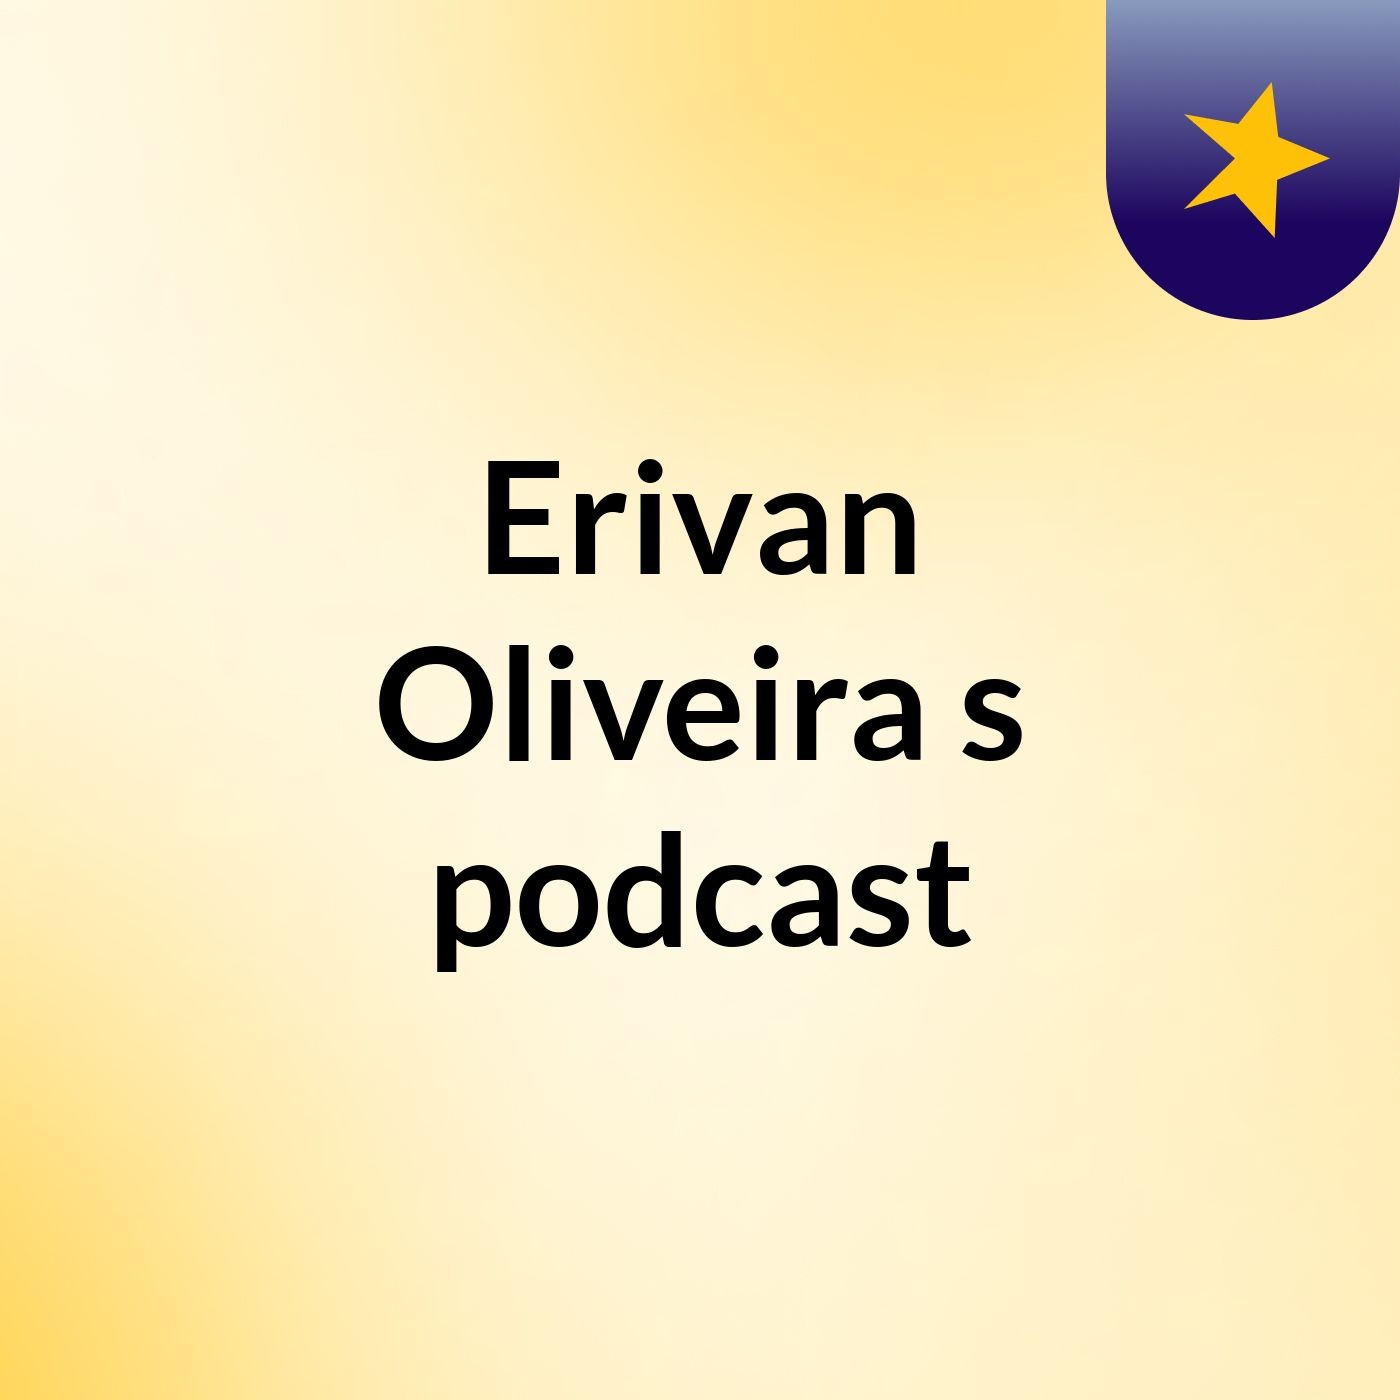 Erivan Oliveira's podcast